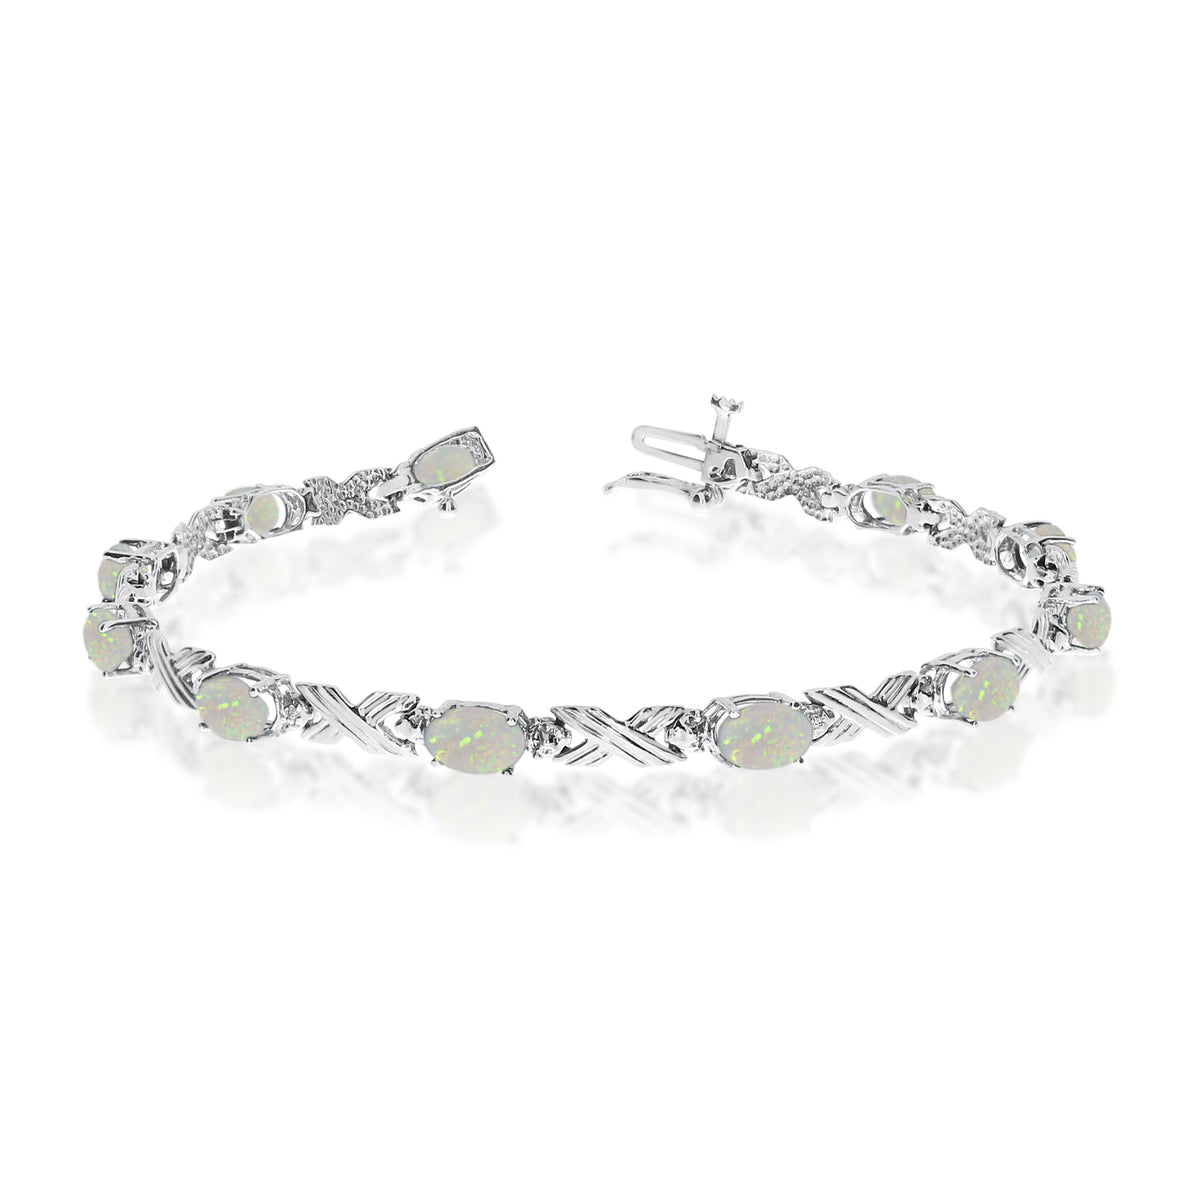 10K White Gold Oval Opal Stones And Diamonds Tennis Bracelet, 7" fine designer jewelry for men and women